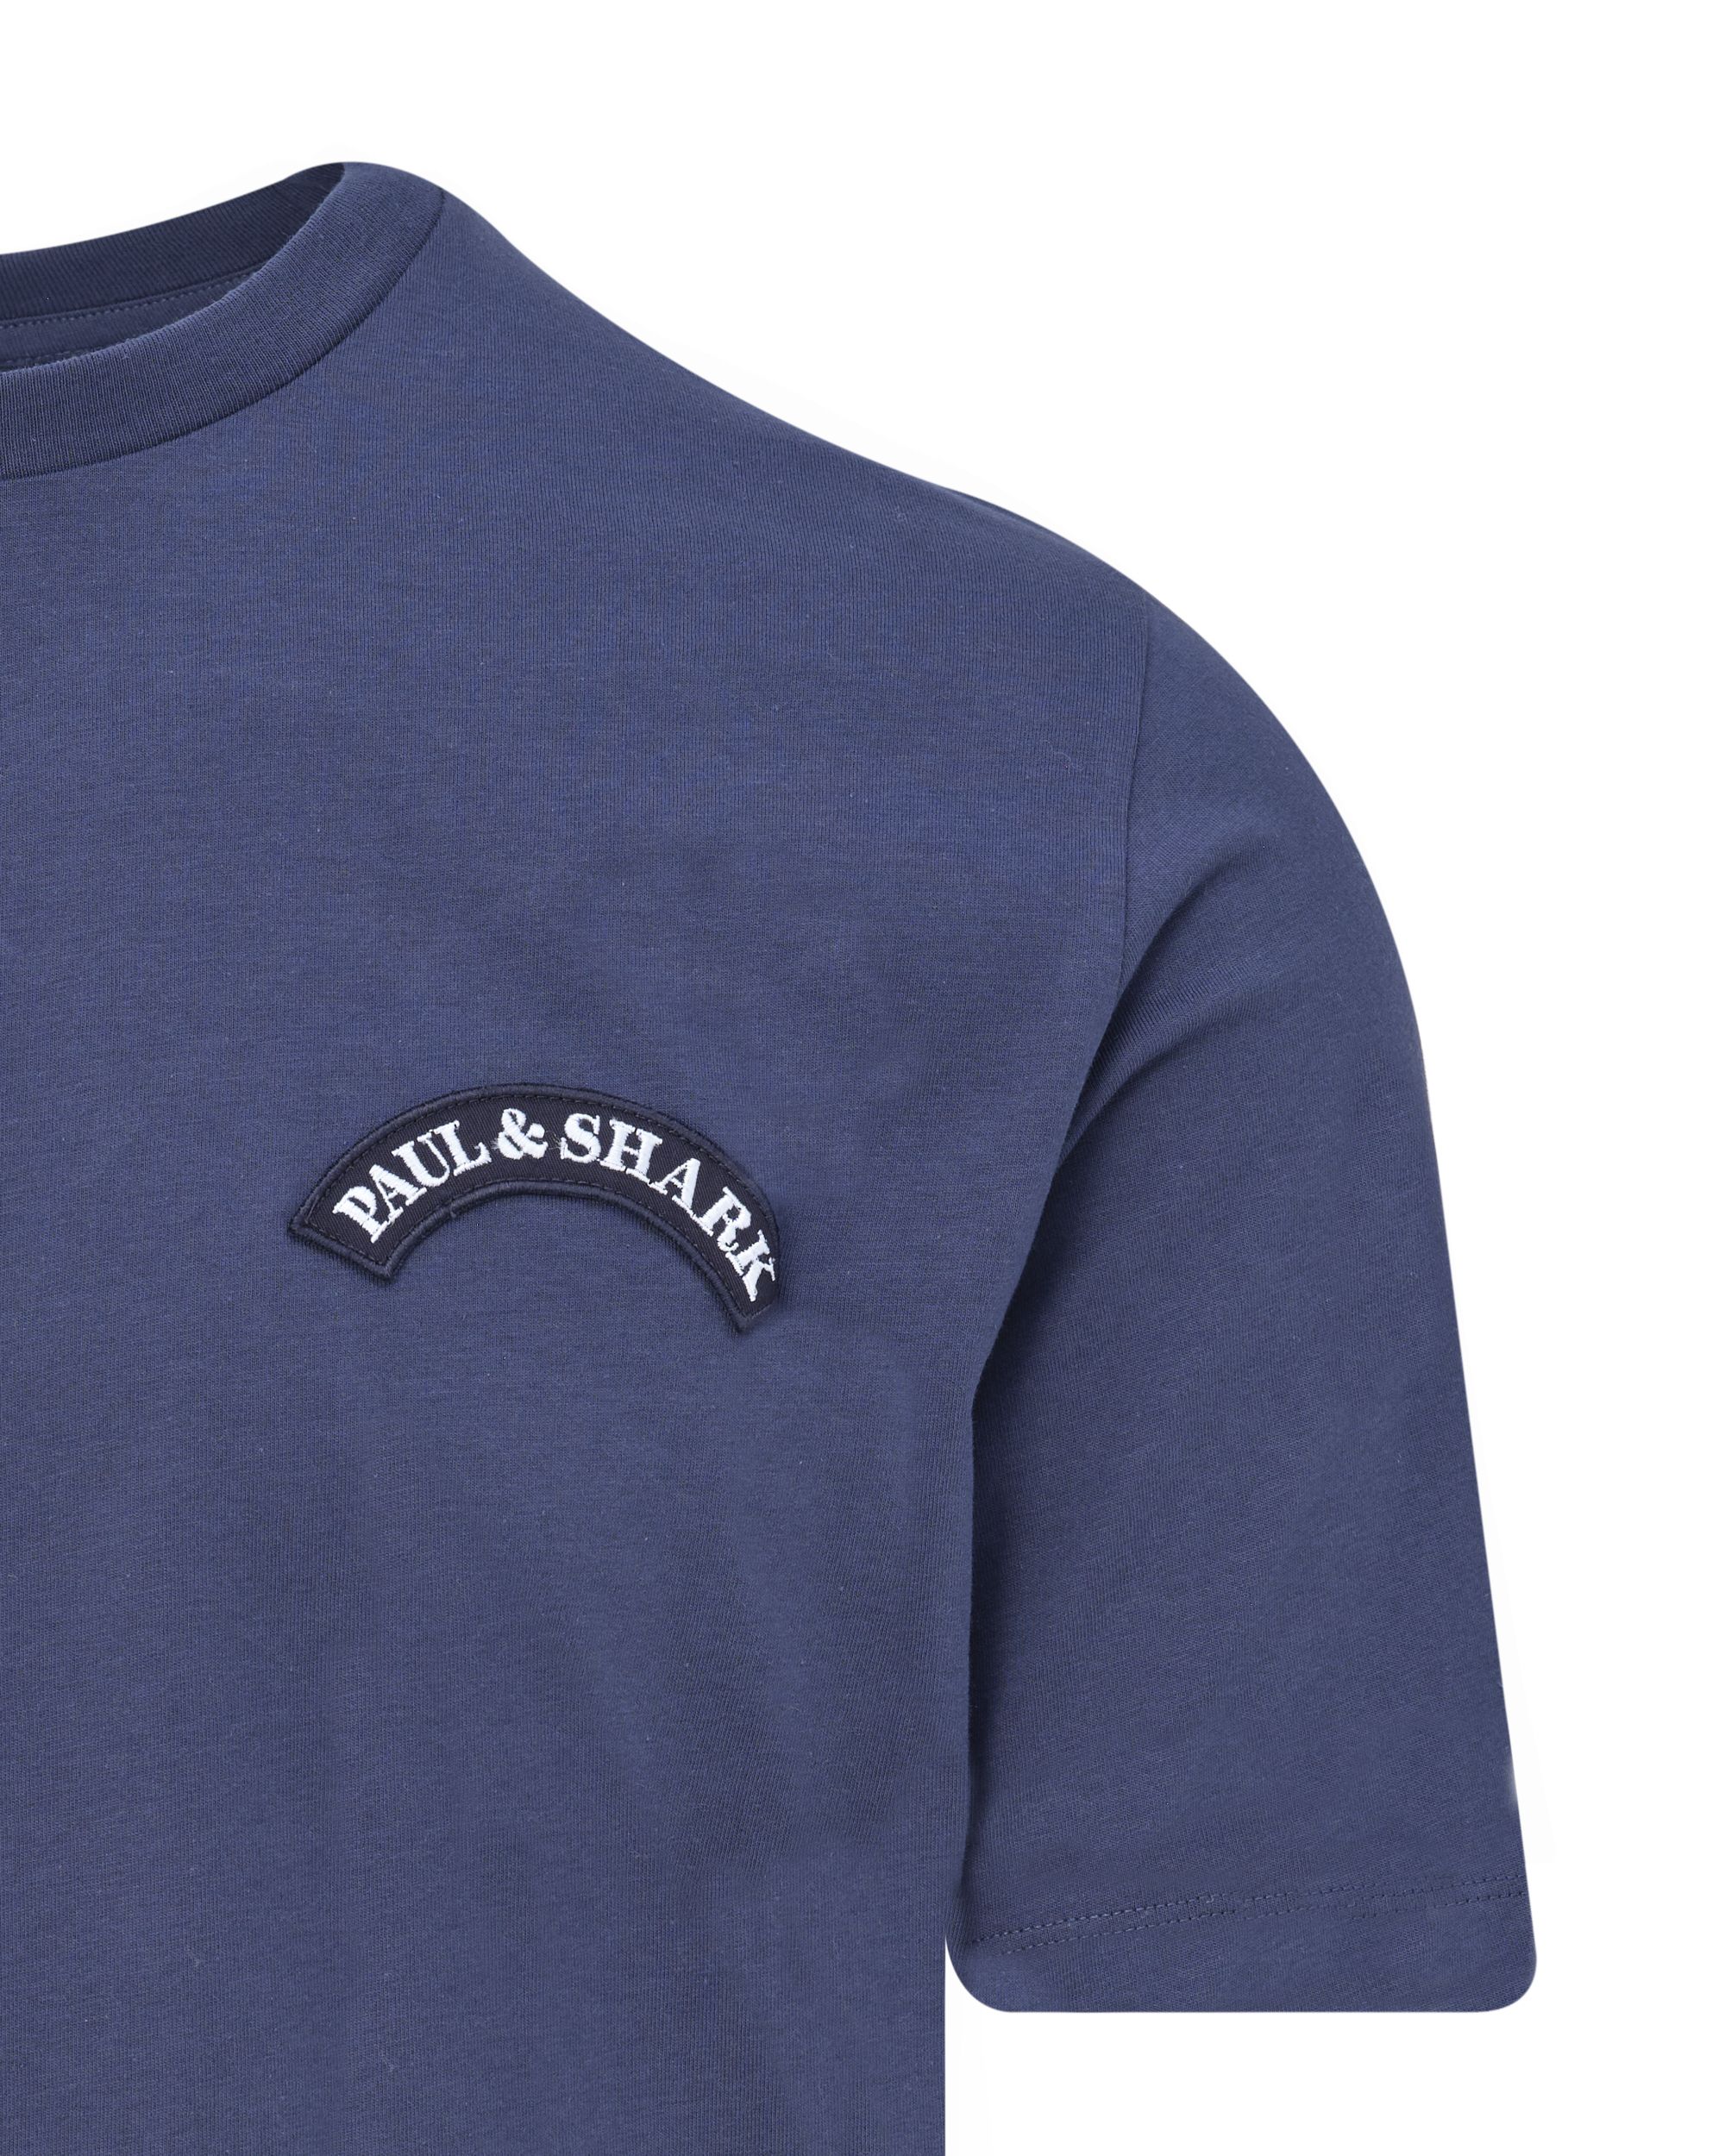 Paul & Shark T-shirt KM Donker blauw 083345-001-L